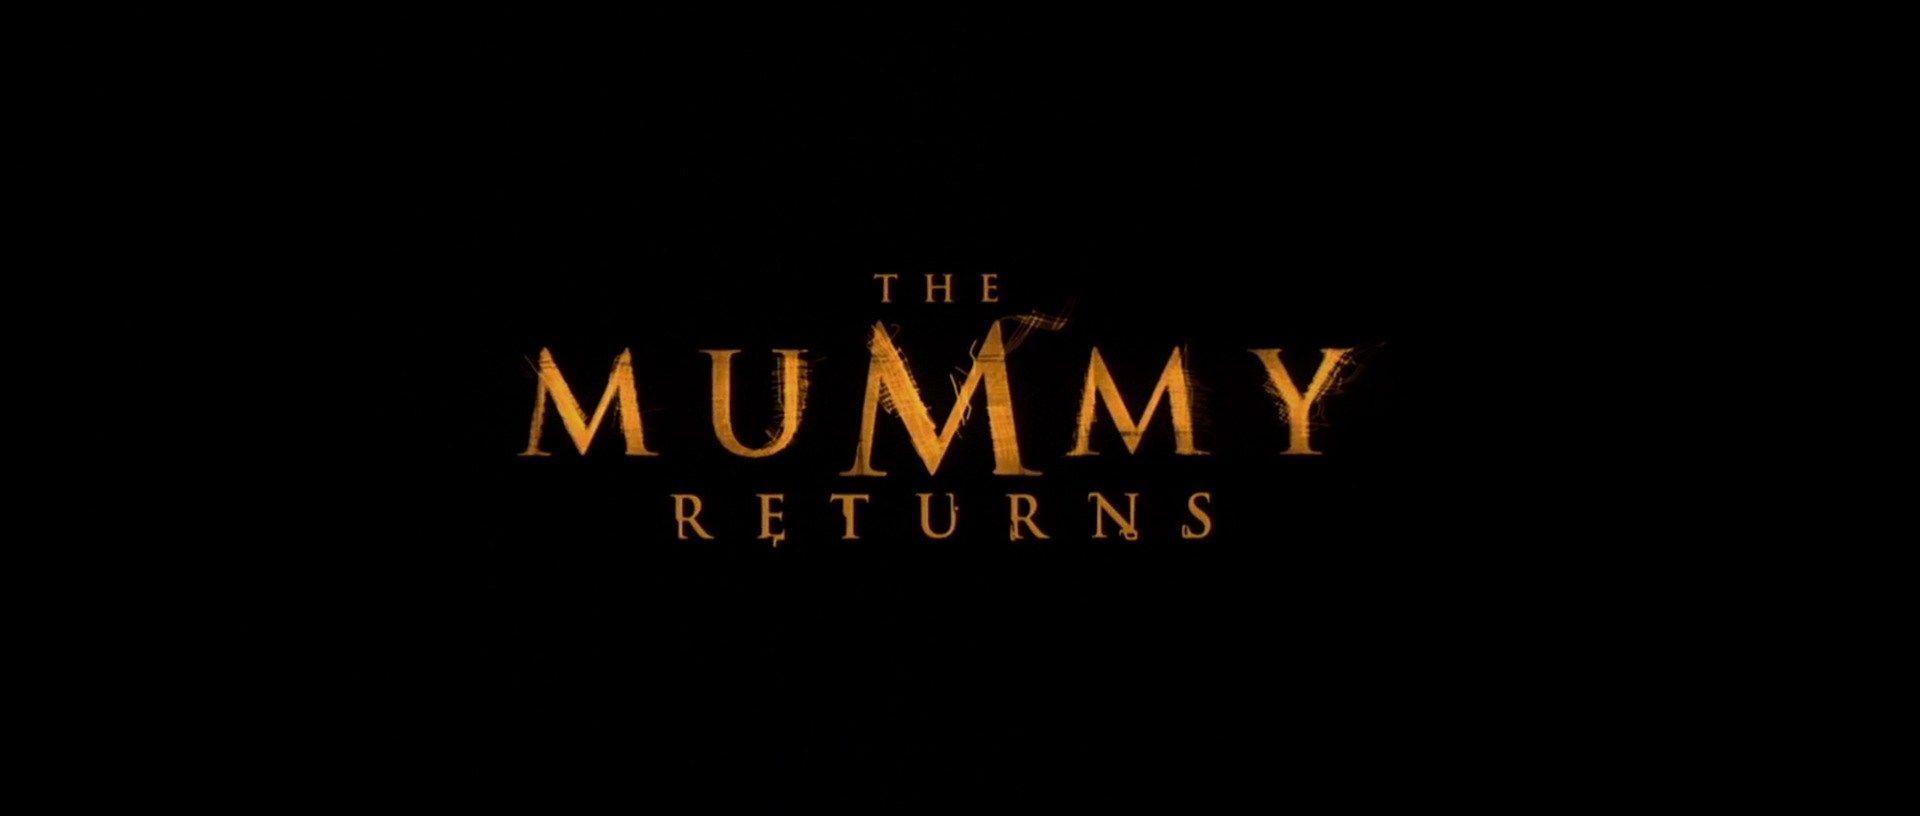 Mummy Movie Logo - The Mummy Returns. Film and Television